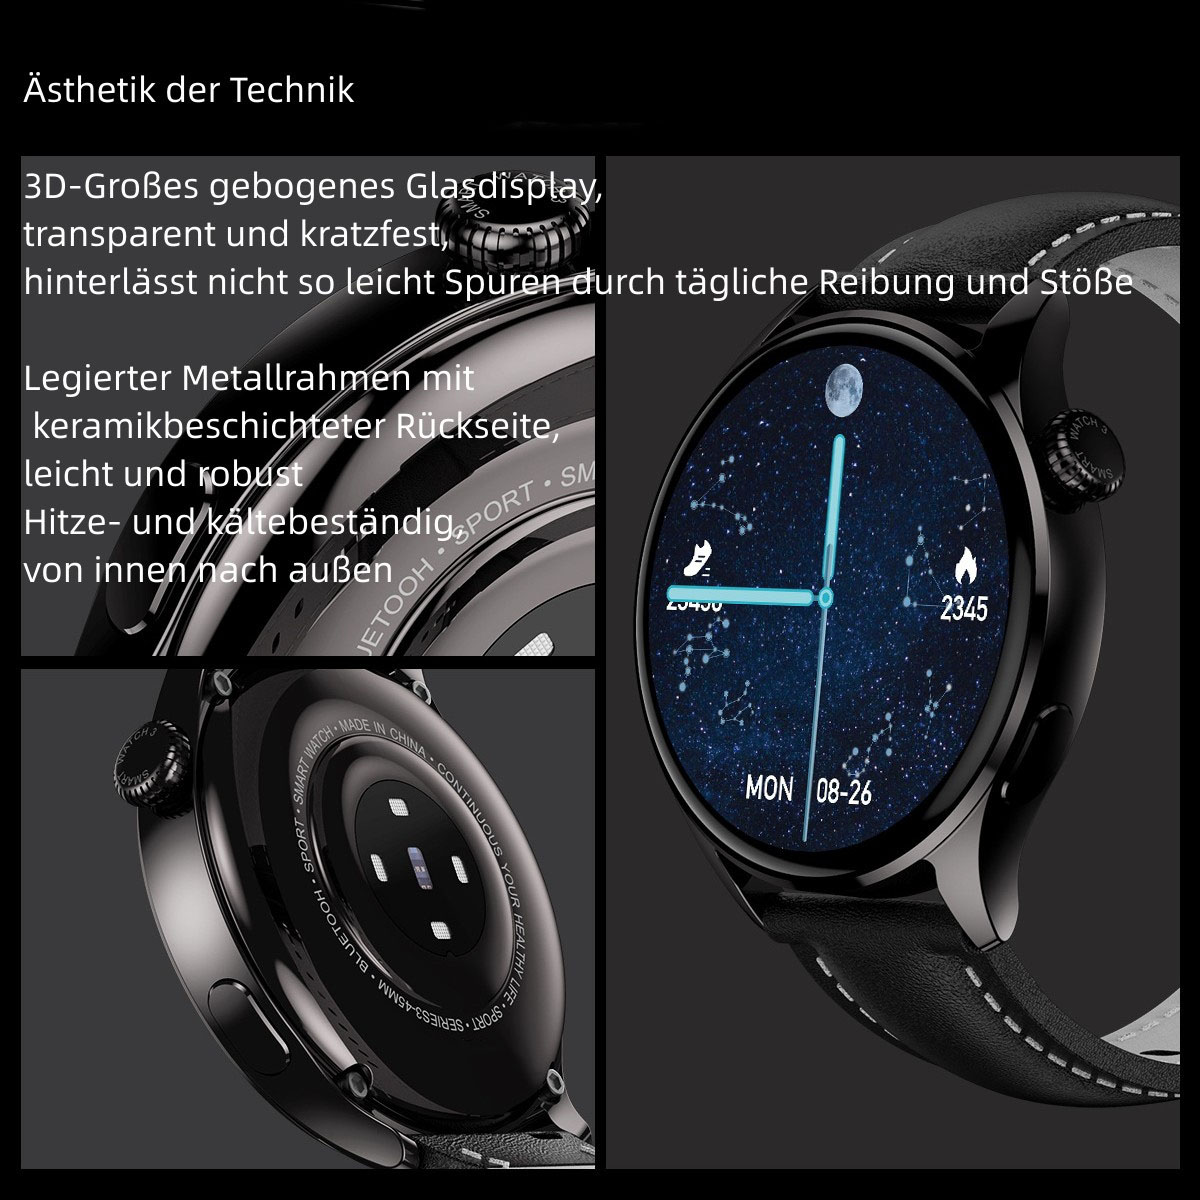 ENBAOXIN Q3 MAX NFC-Zugangsschlüssel, Smart Gürtel, Watch Zinklegierung AI-Sprachassistent Smartwatch Vakuumbeschichtung Sports Silikon, + - GPS-Sport-Track, Braun